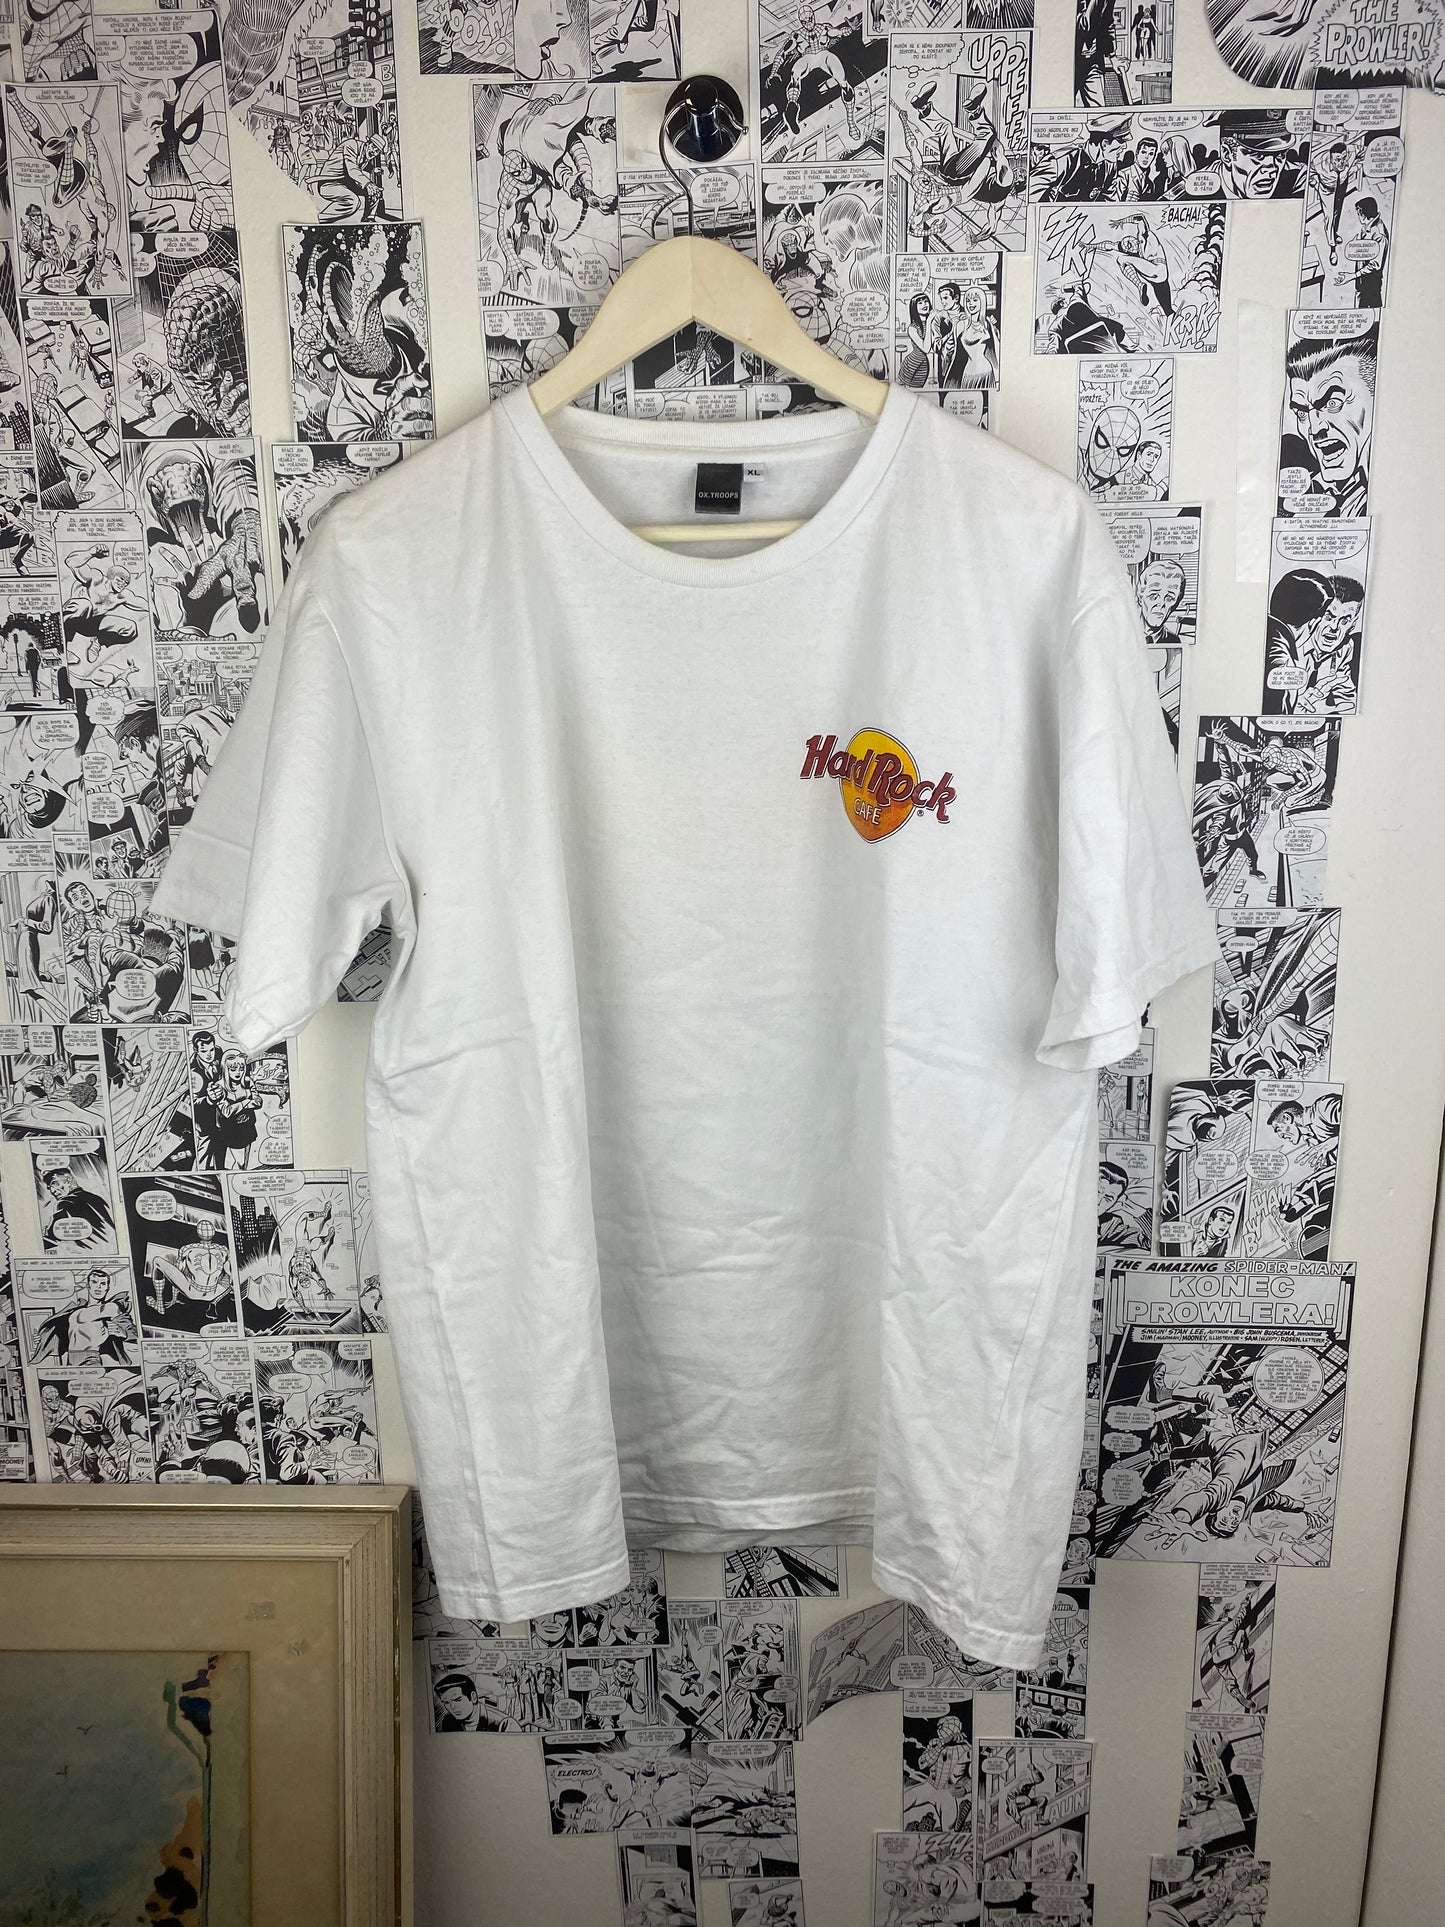 Vintage Hard Rock Cafe “Pattaya” t-shirt - size XL